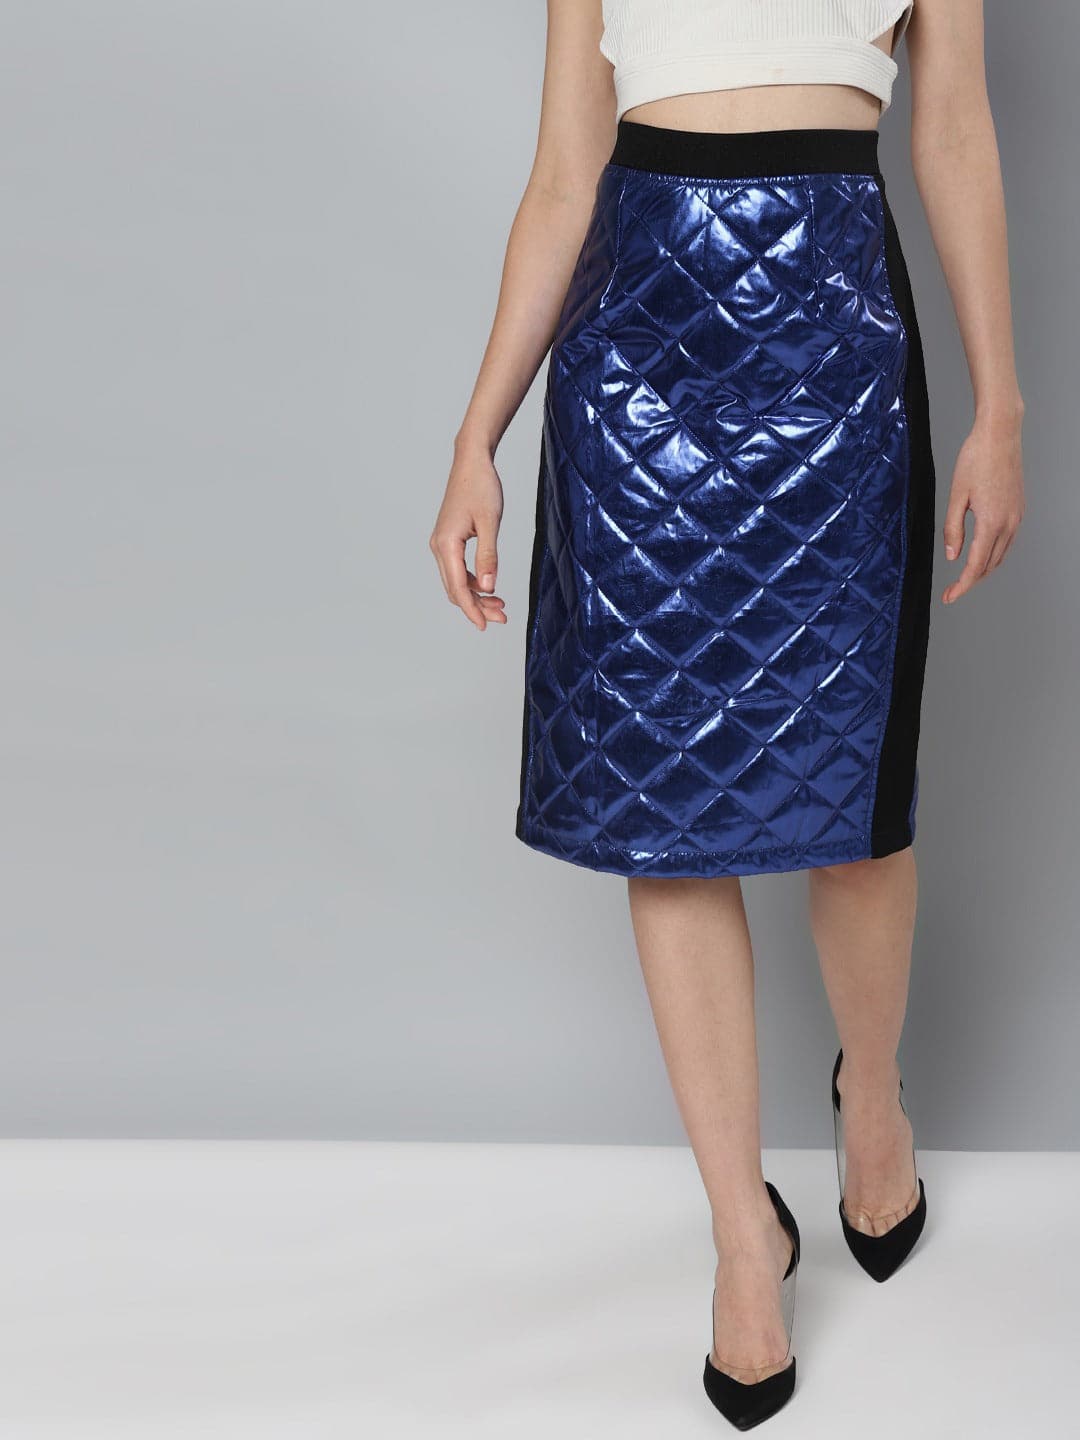 Royal Blue Mettalic Pencil Skirt-Skirts-SASSAFRAS